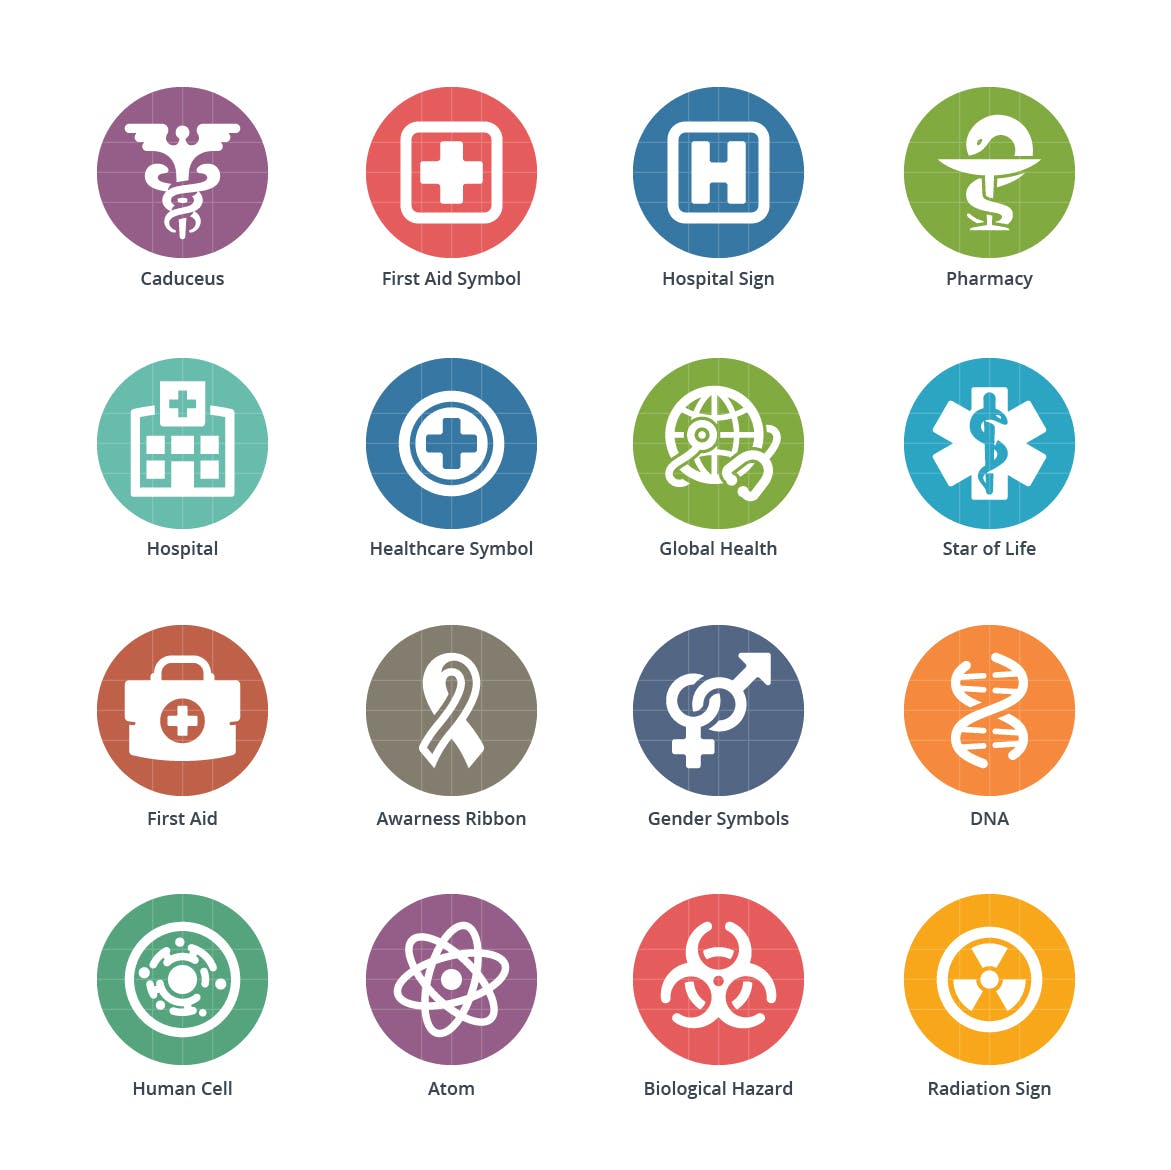 Colored系列-医疗保健主题矢量蚂蚁素材精选图标集v1 Medical & Health Care Icons Set 1 – Colored Series插图(2)